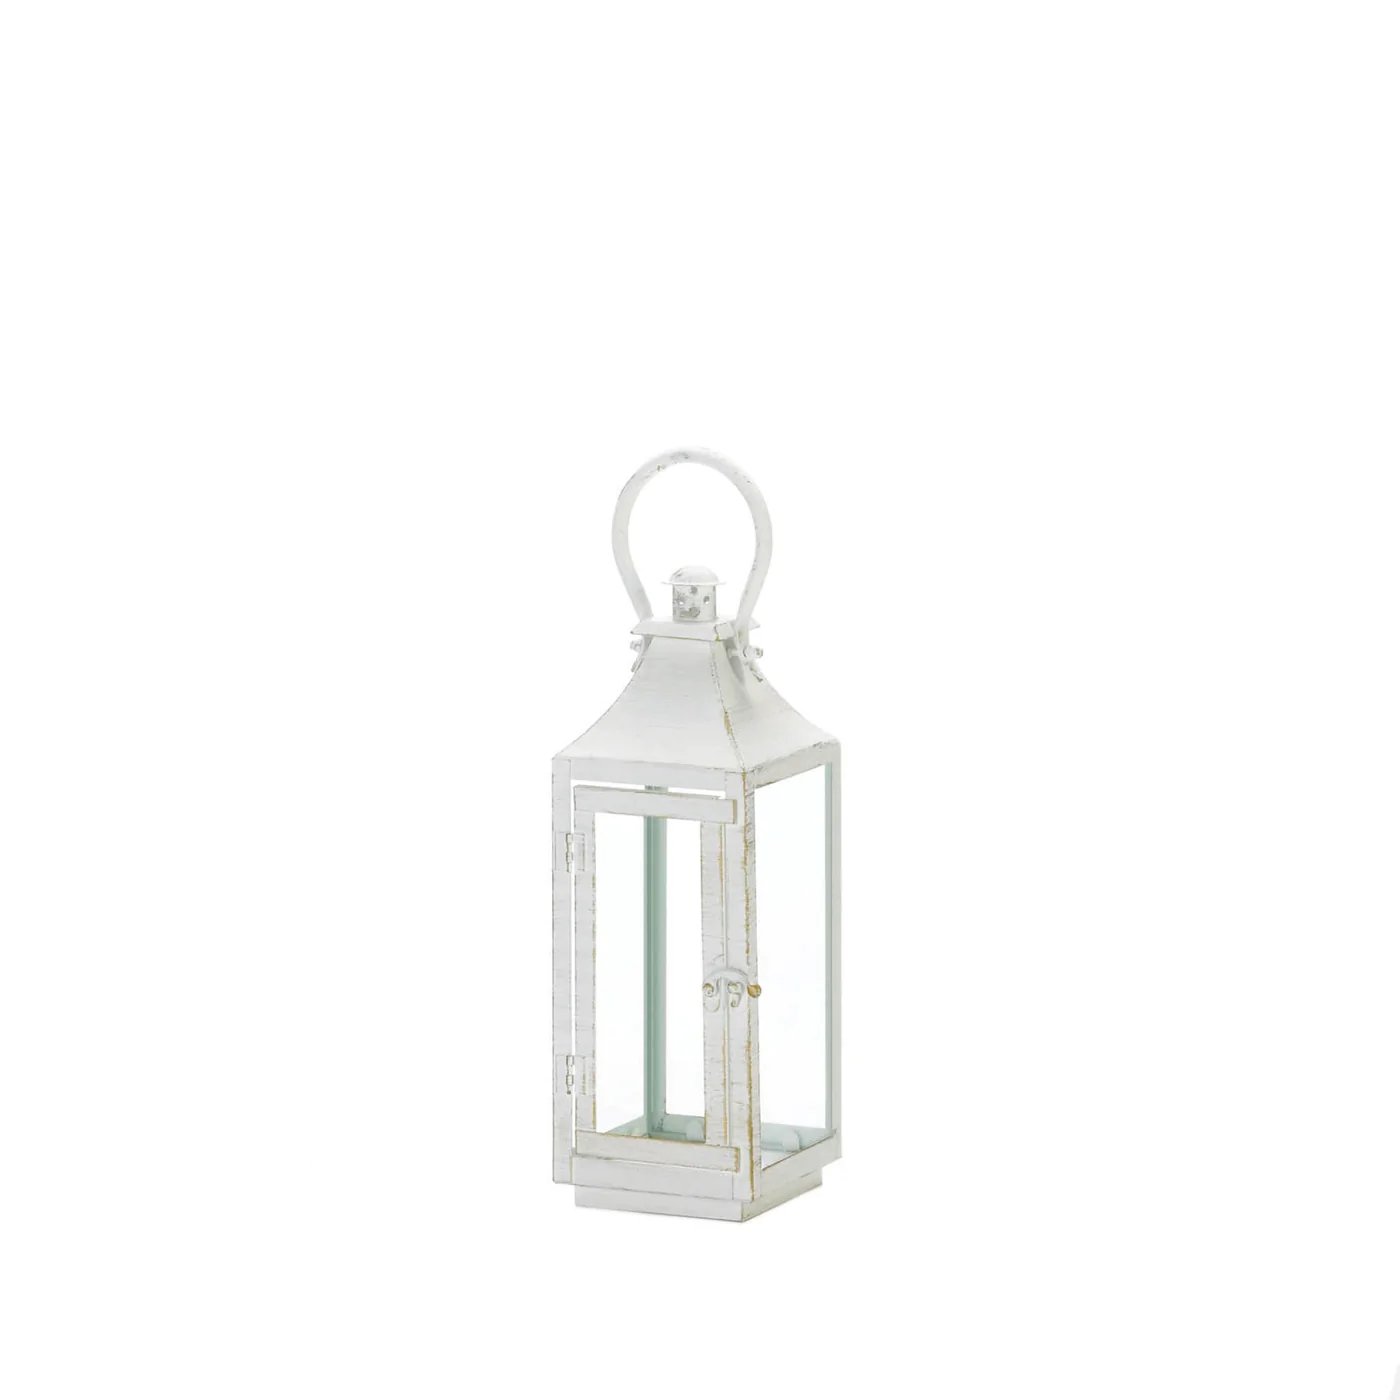 10- Traditional White Lanterns - $185.63